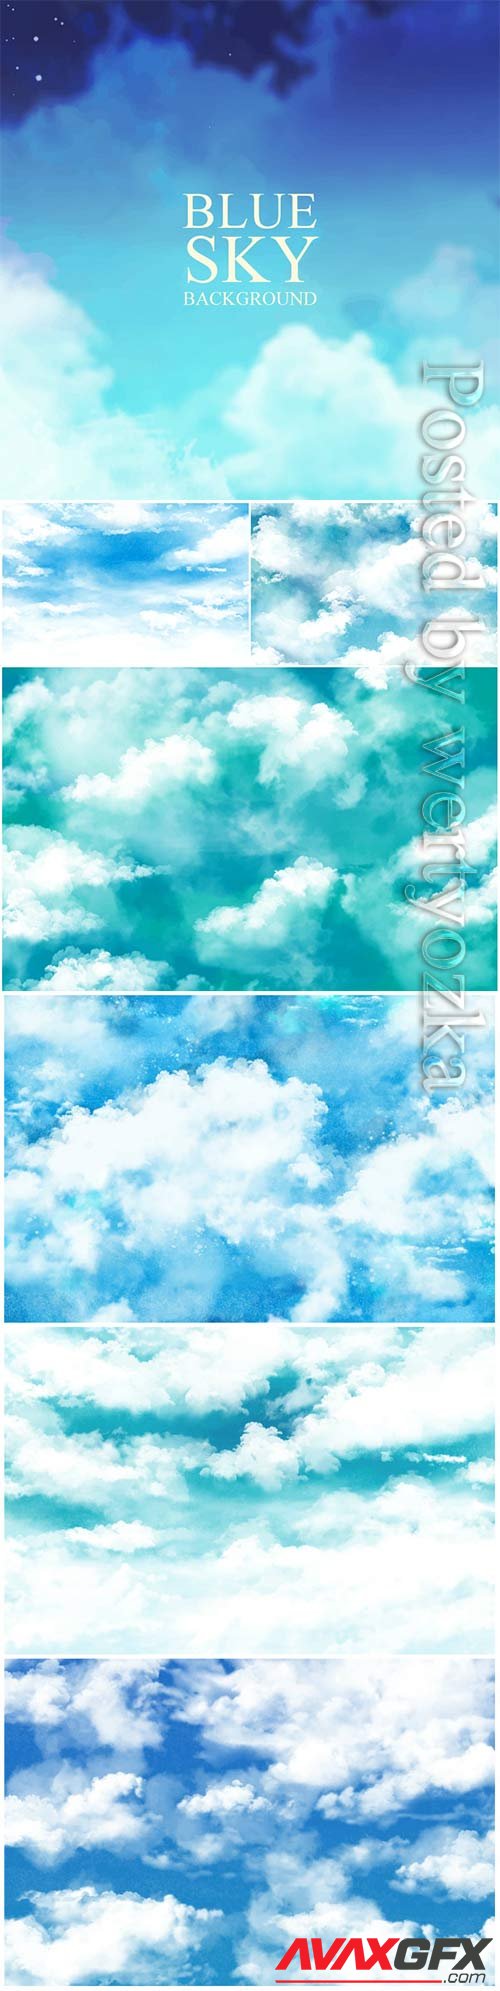 Sky paint texture vector background